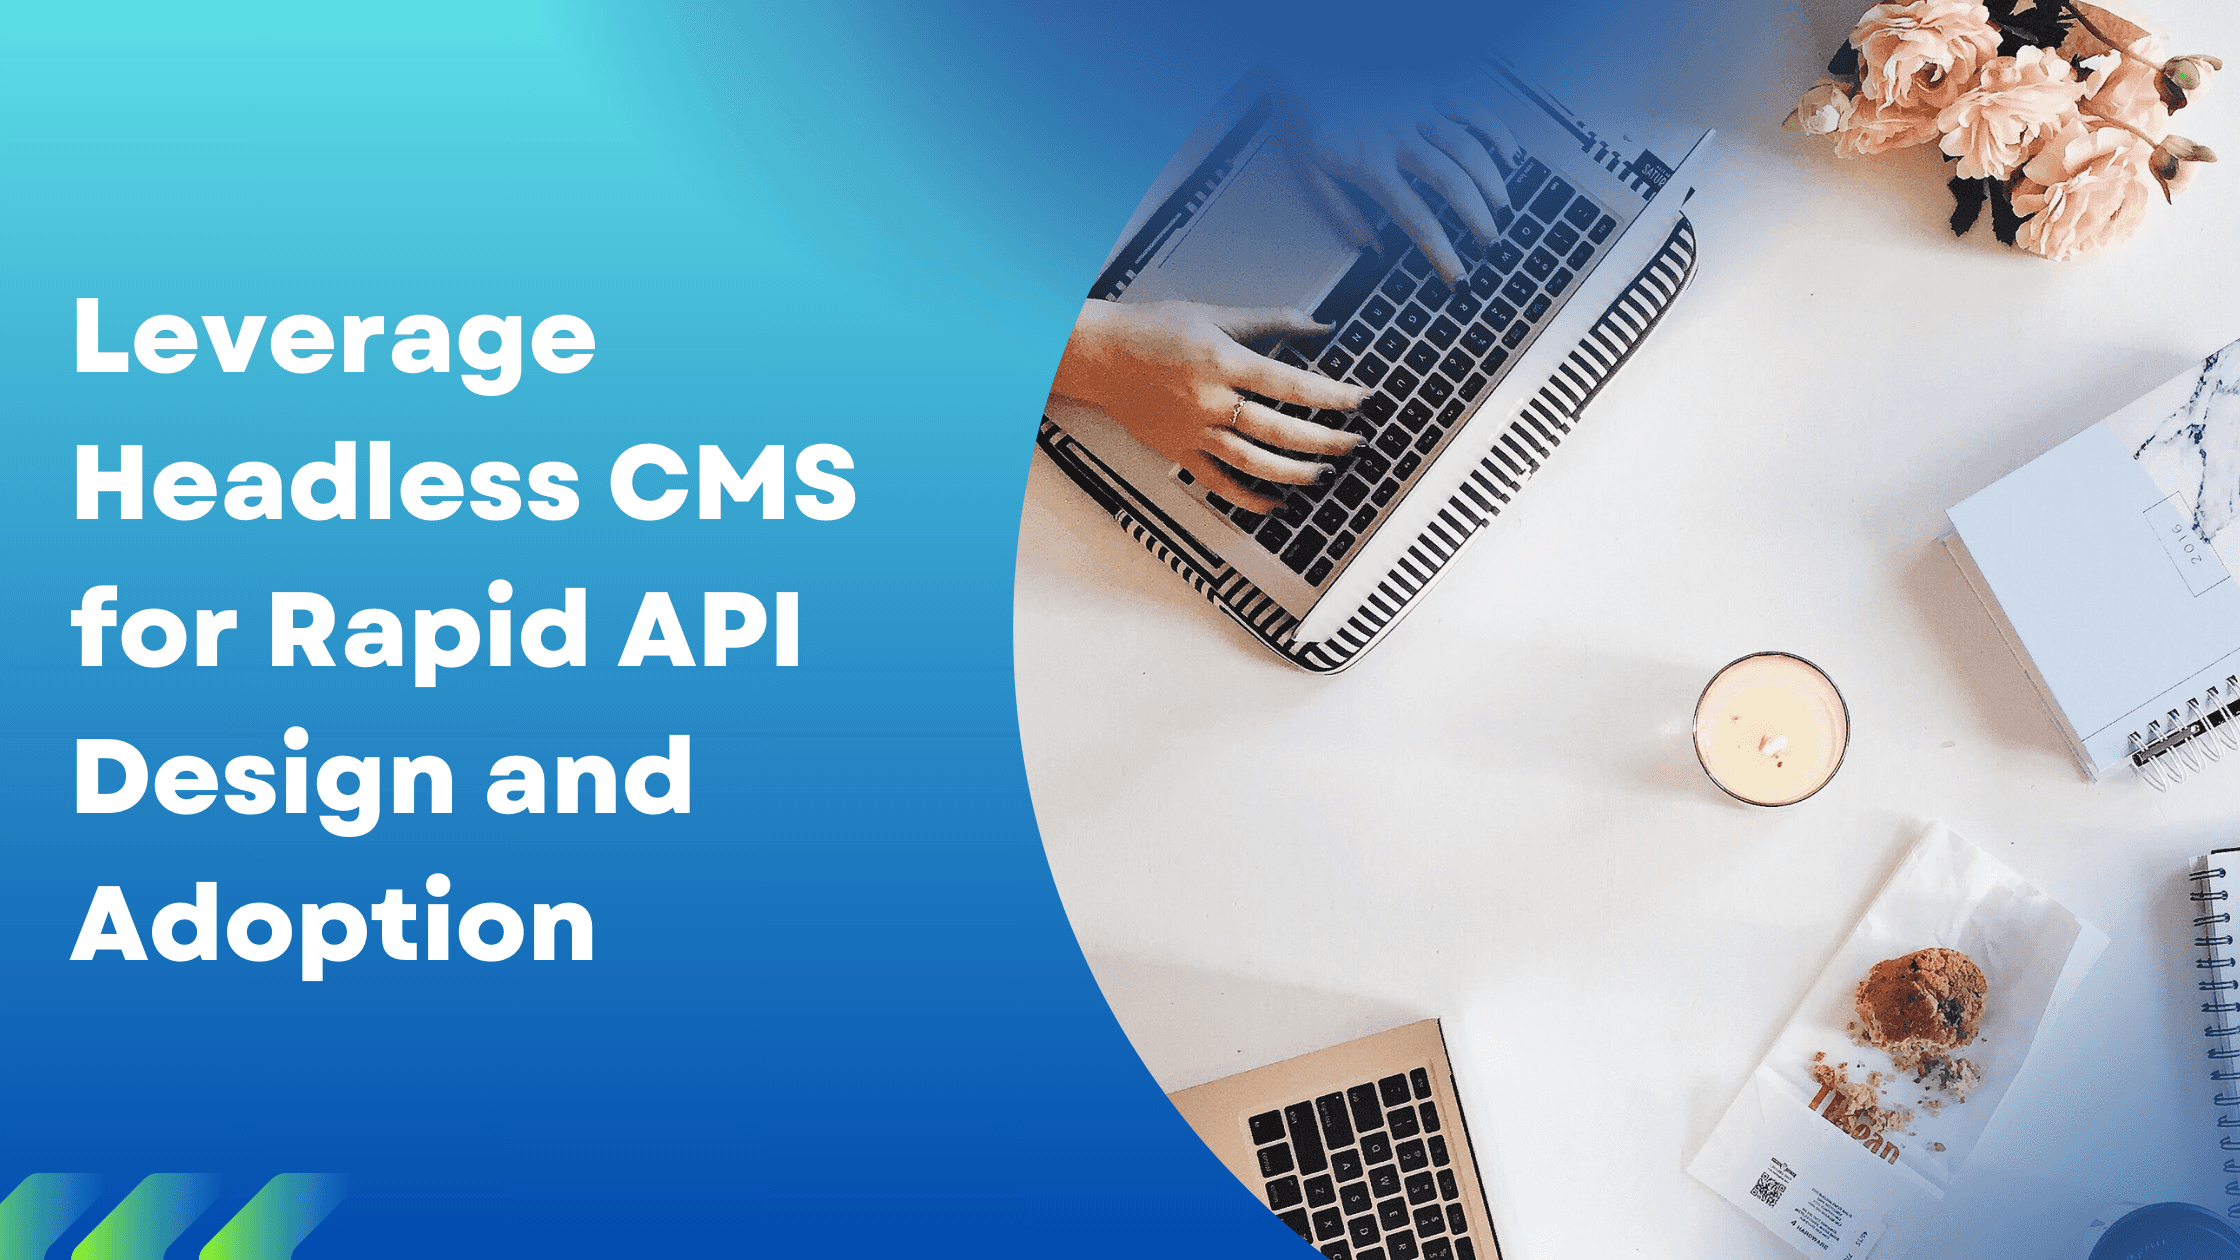 Leverage Headless CMS for Rapid API Design and Adoption